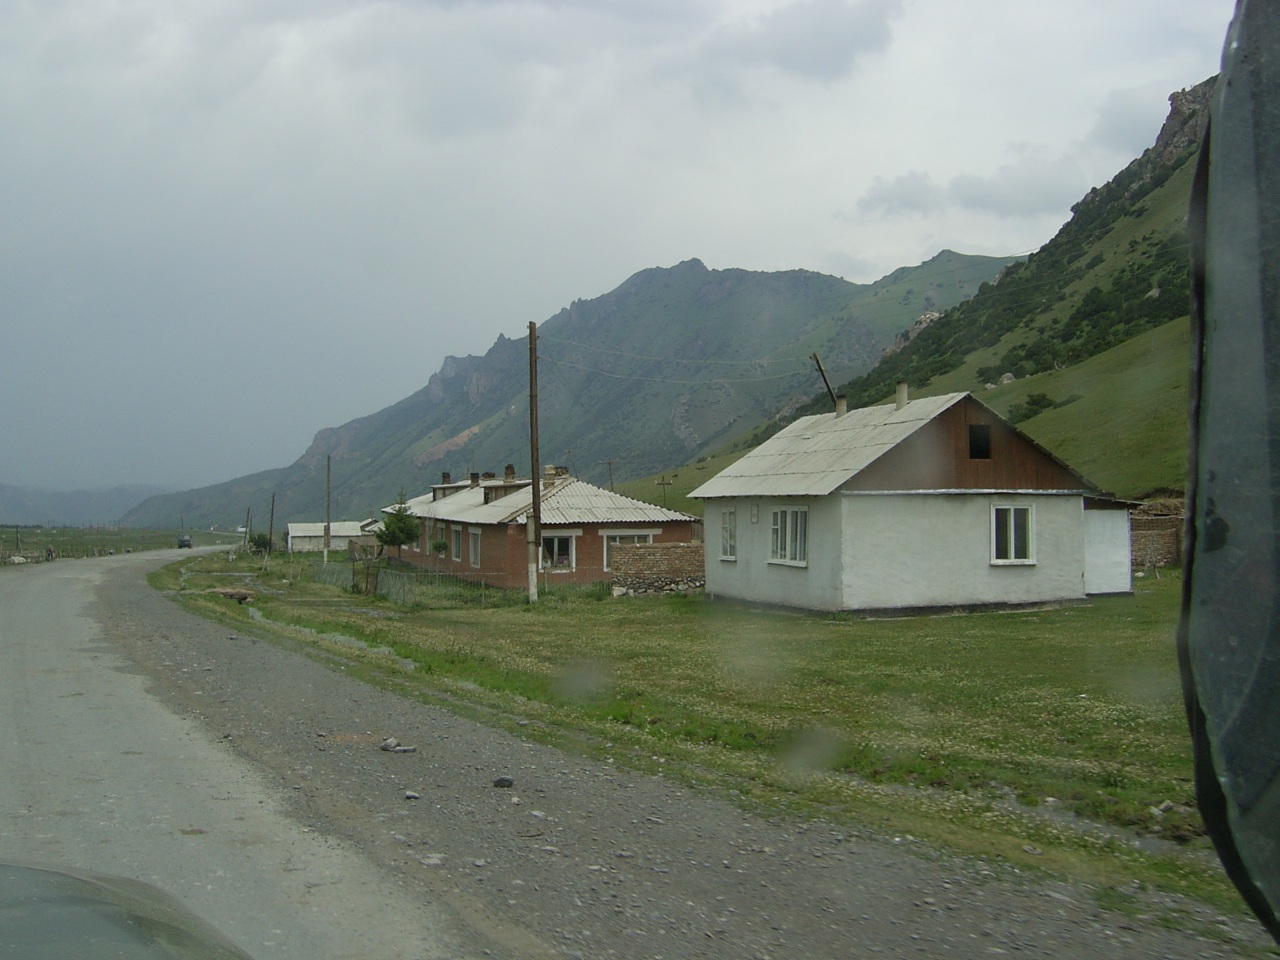 Kyrgyz village near Tajik border